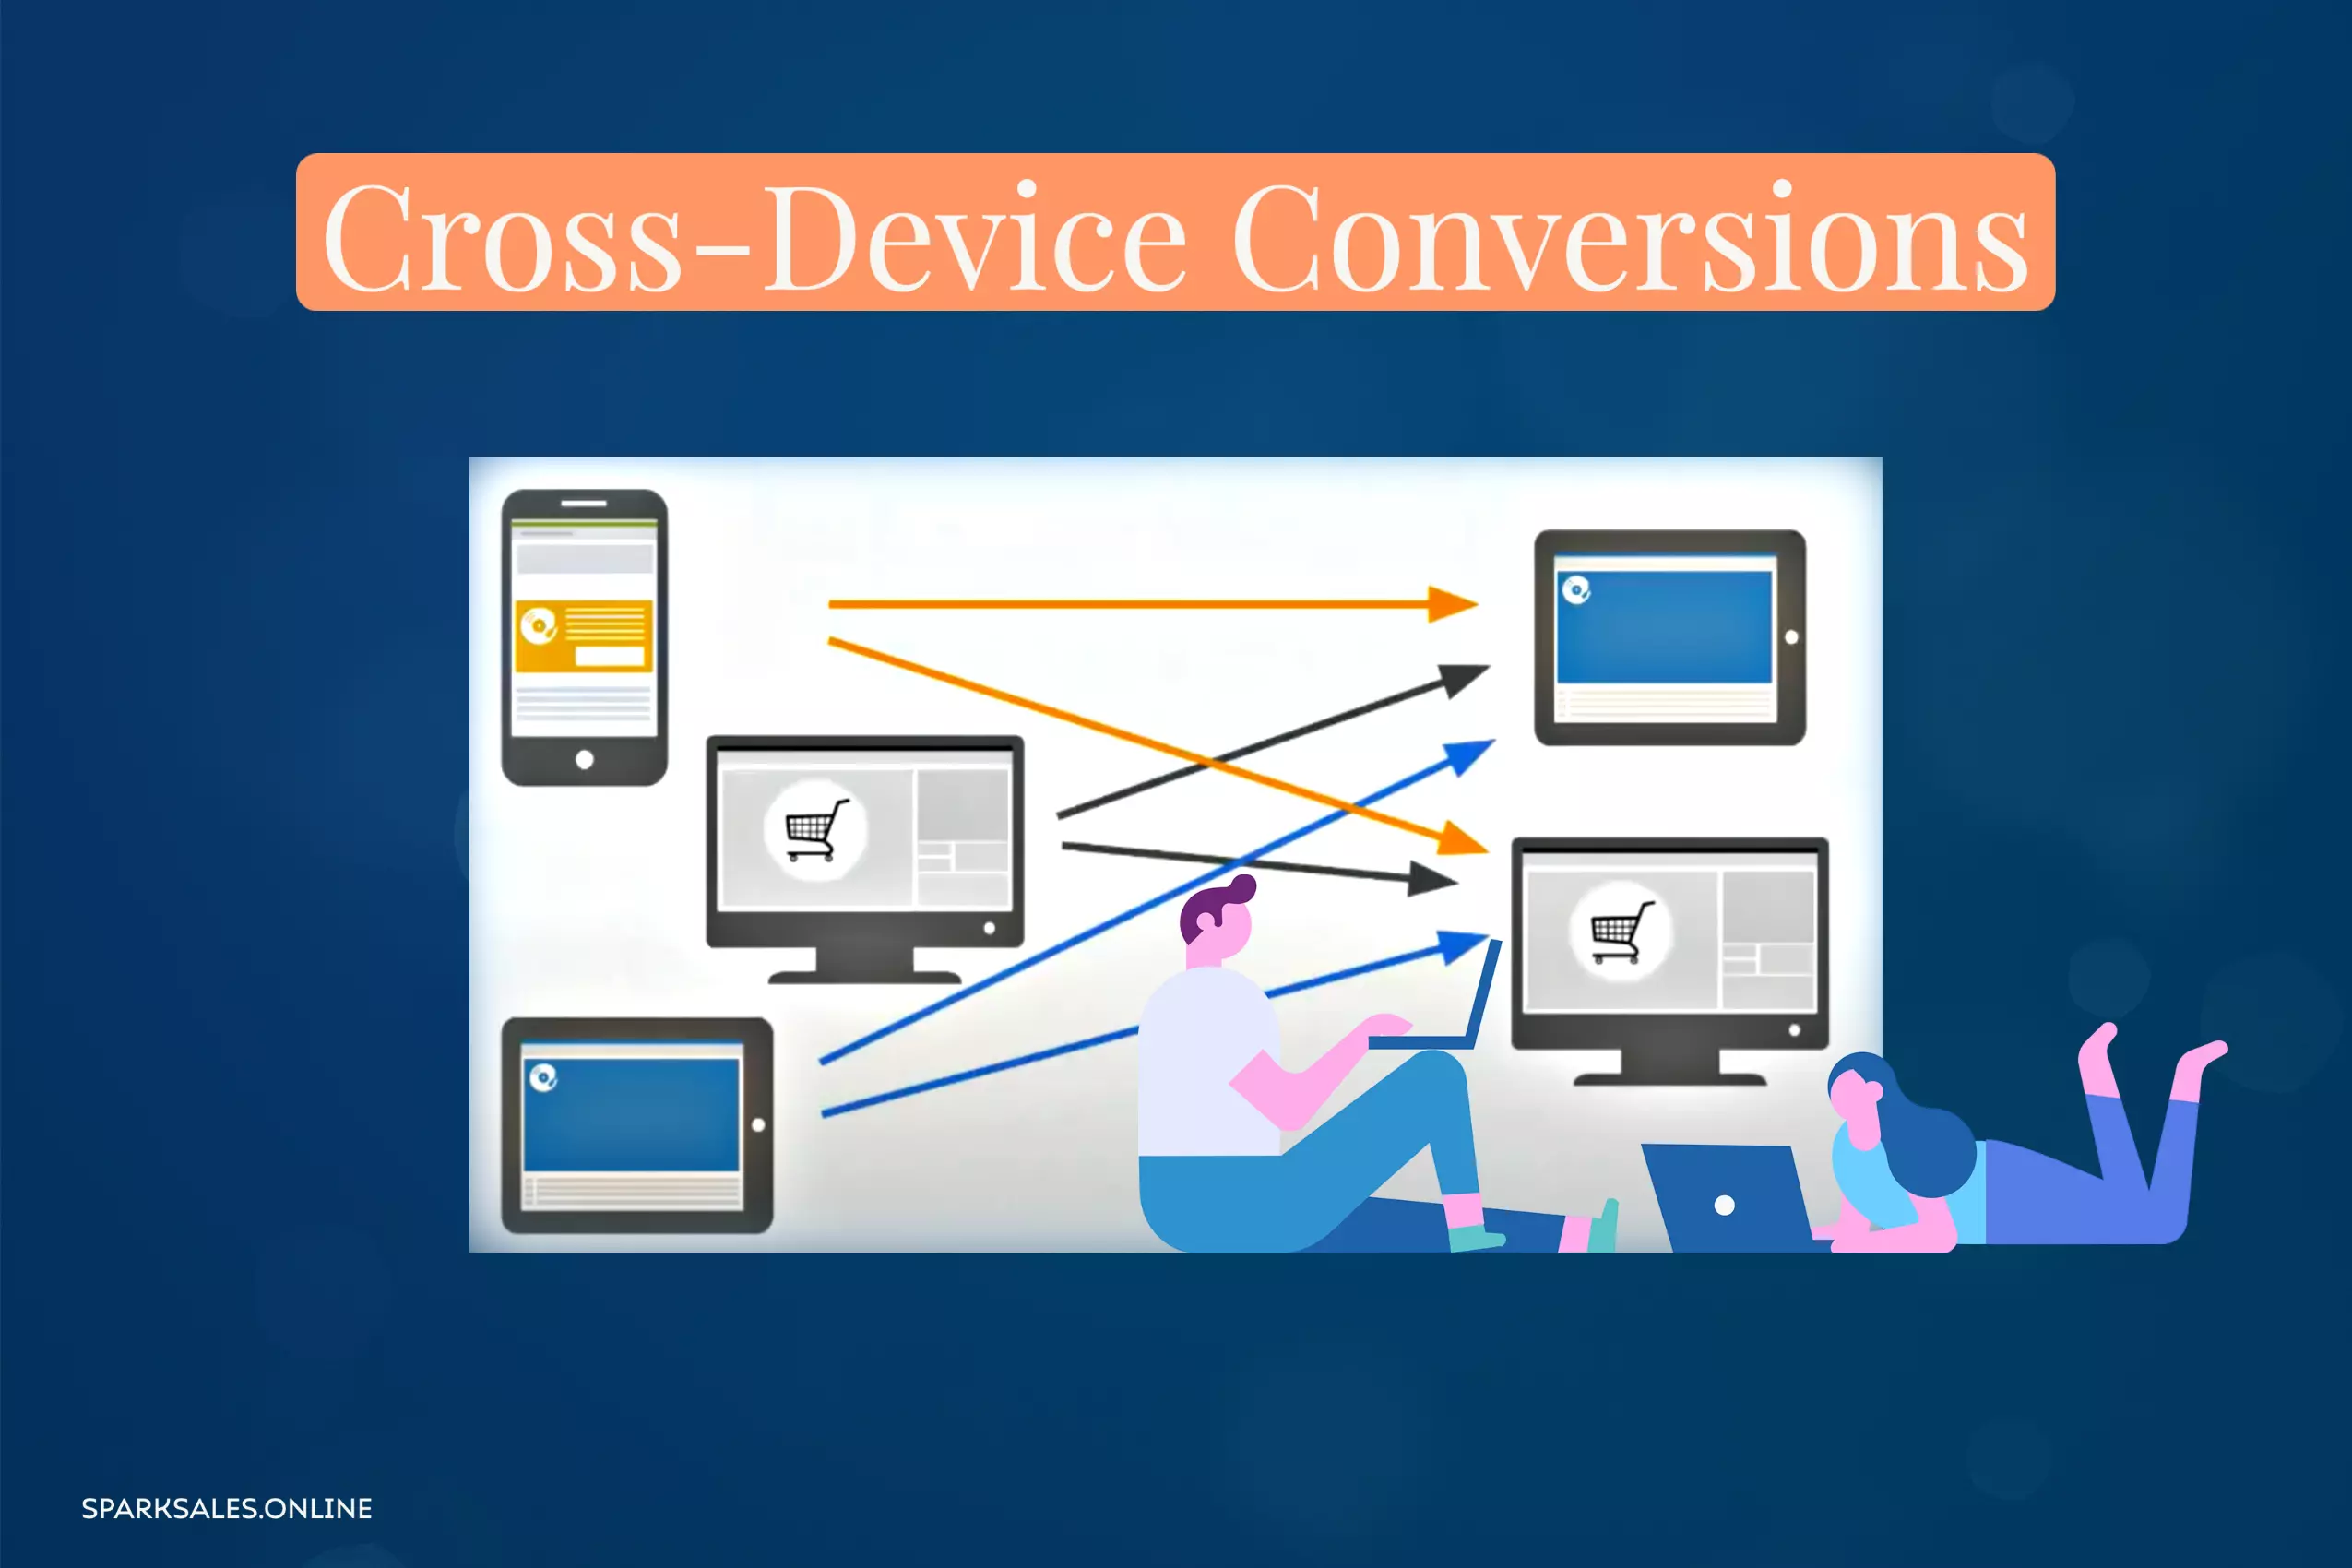 Cross-Device Conversions